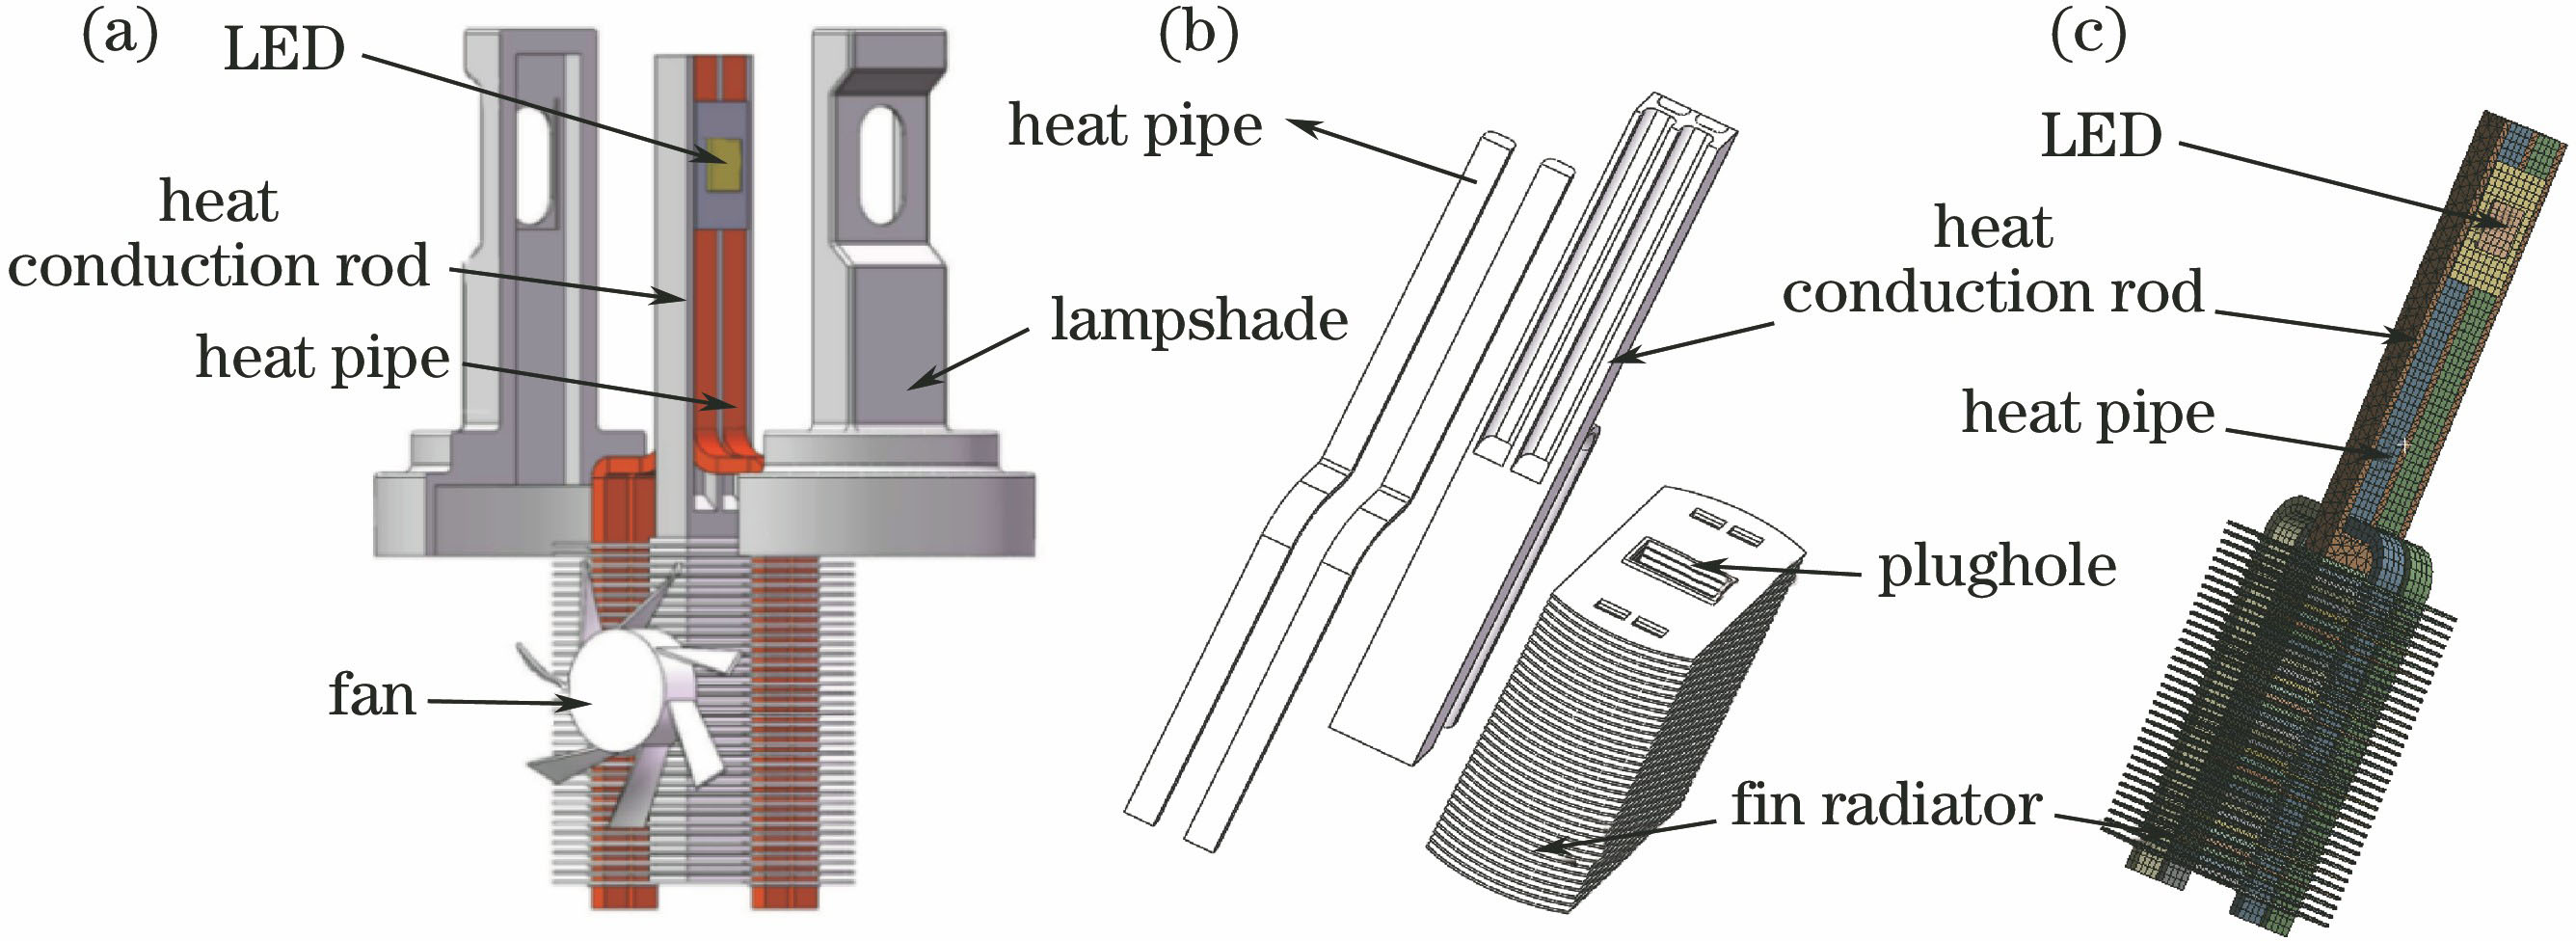 Automotive headlight diagram. (a) Automobile LED headlight structure; (b) radiator structure; (c) grid diagram of radiator